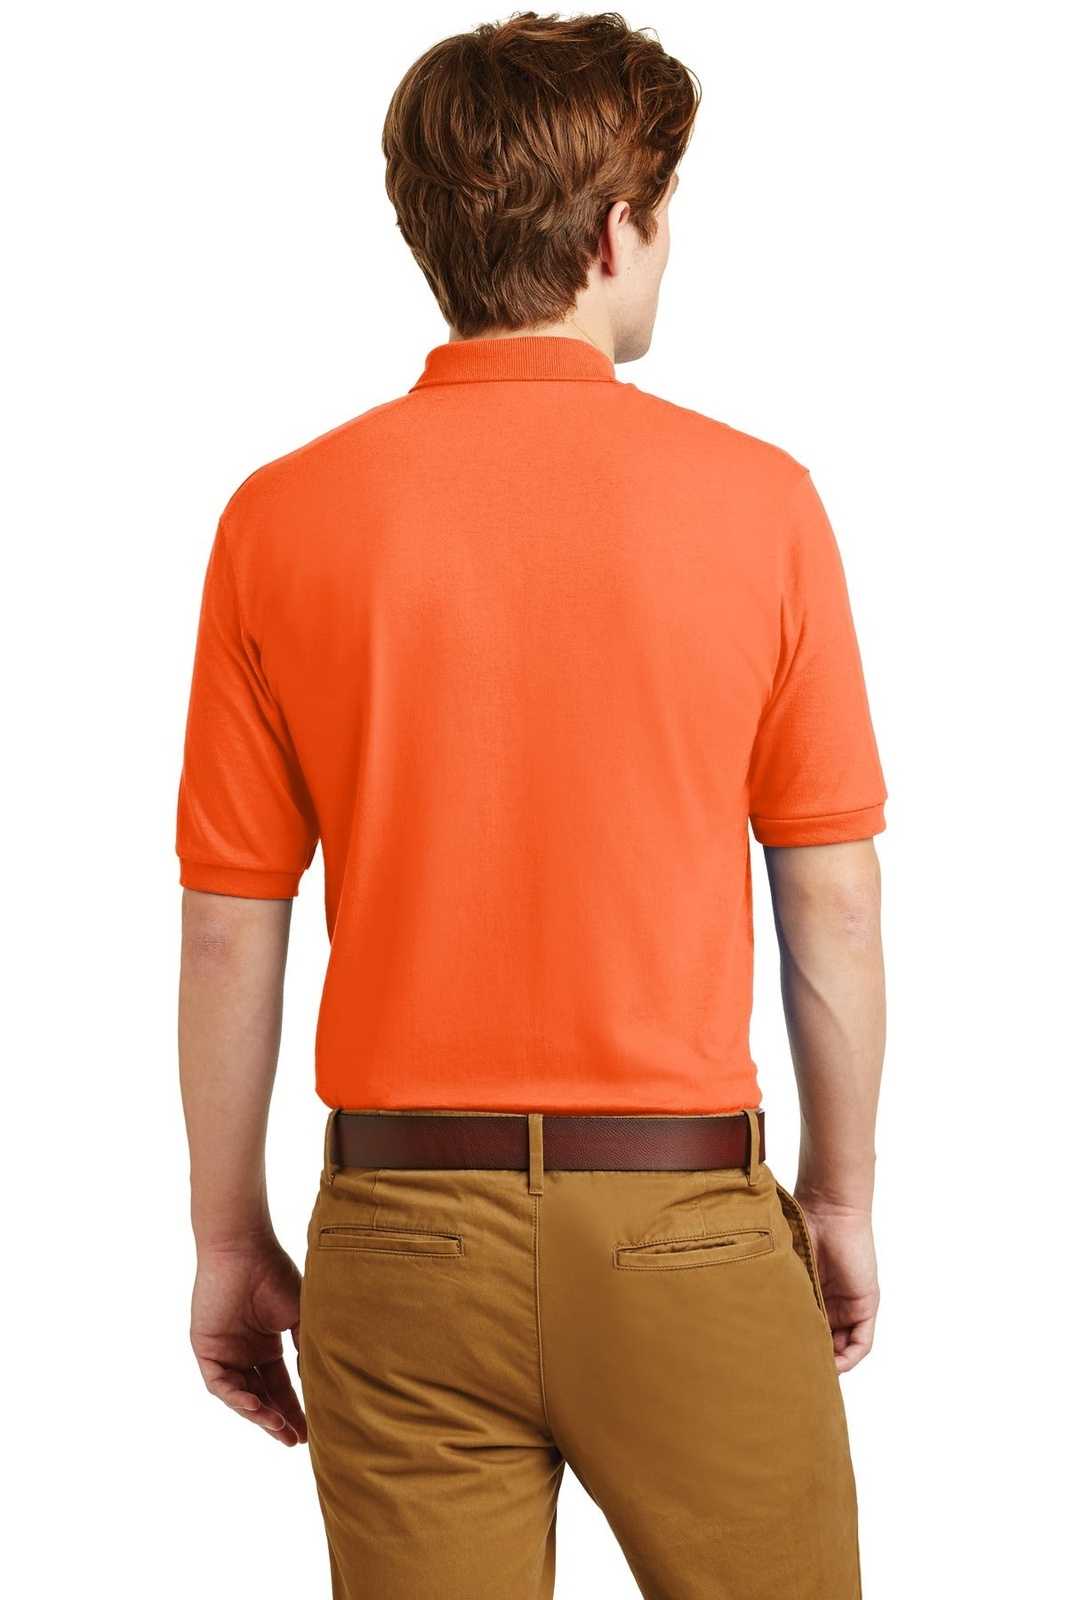 Jerzees 437M Spotshield 56-Ounce Jersey Knit Sport Shirt - Safety Orange - HIT a Double